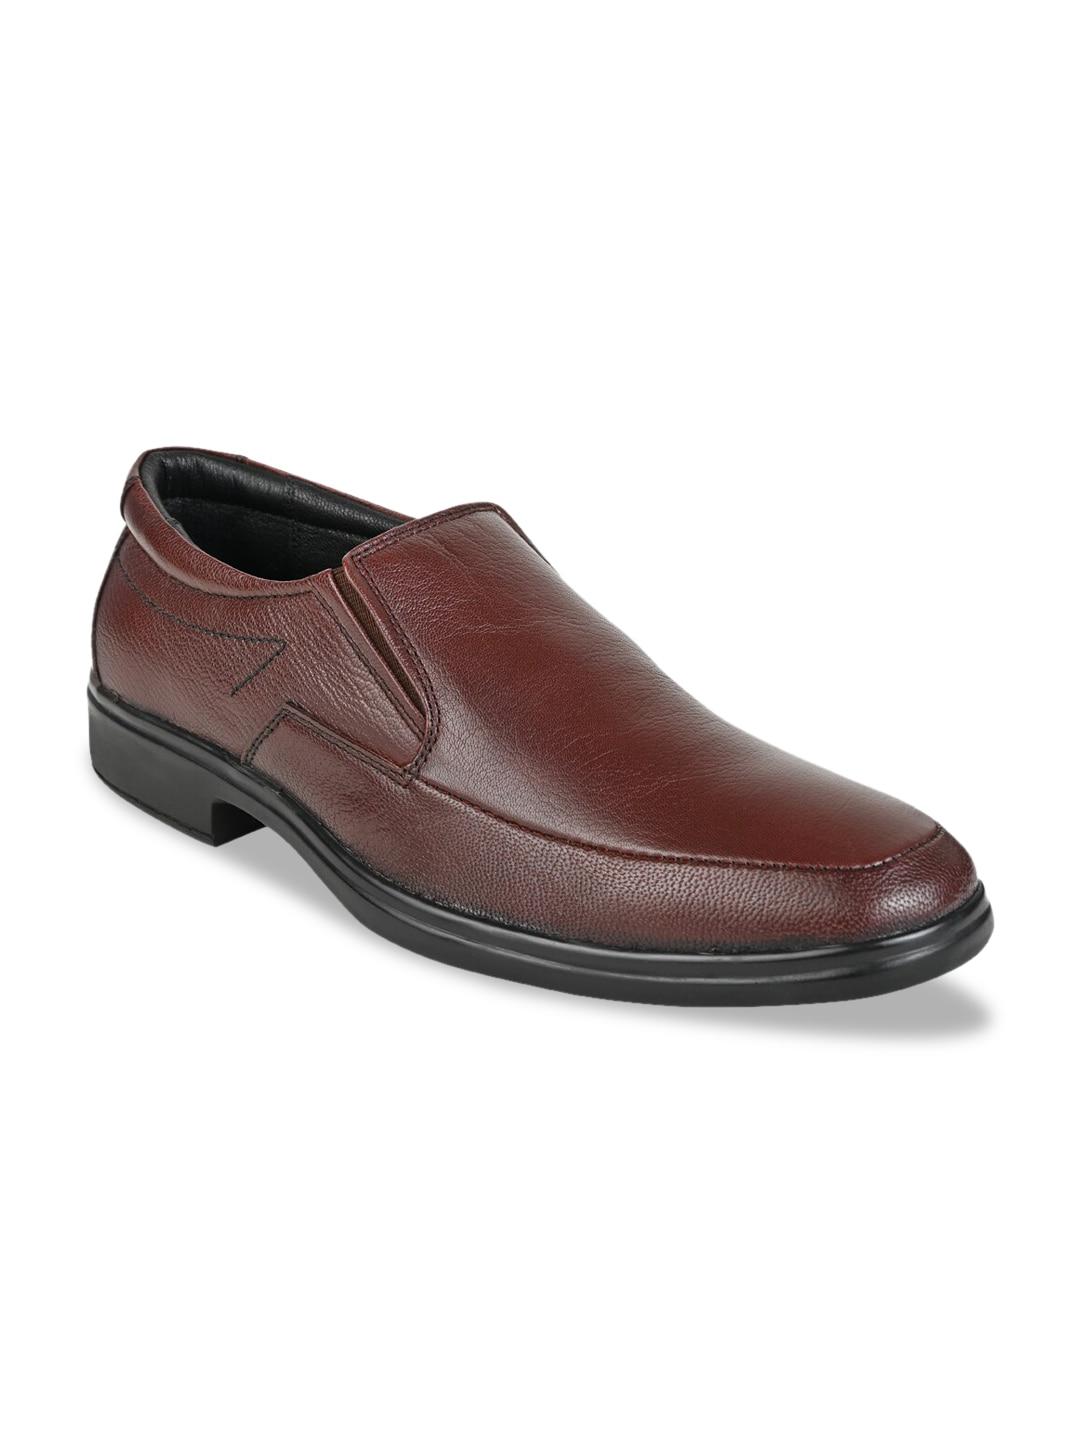 Regal Men Textured Leather Formal Slip on Shoes